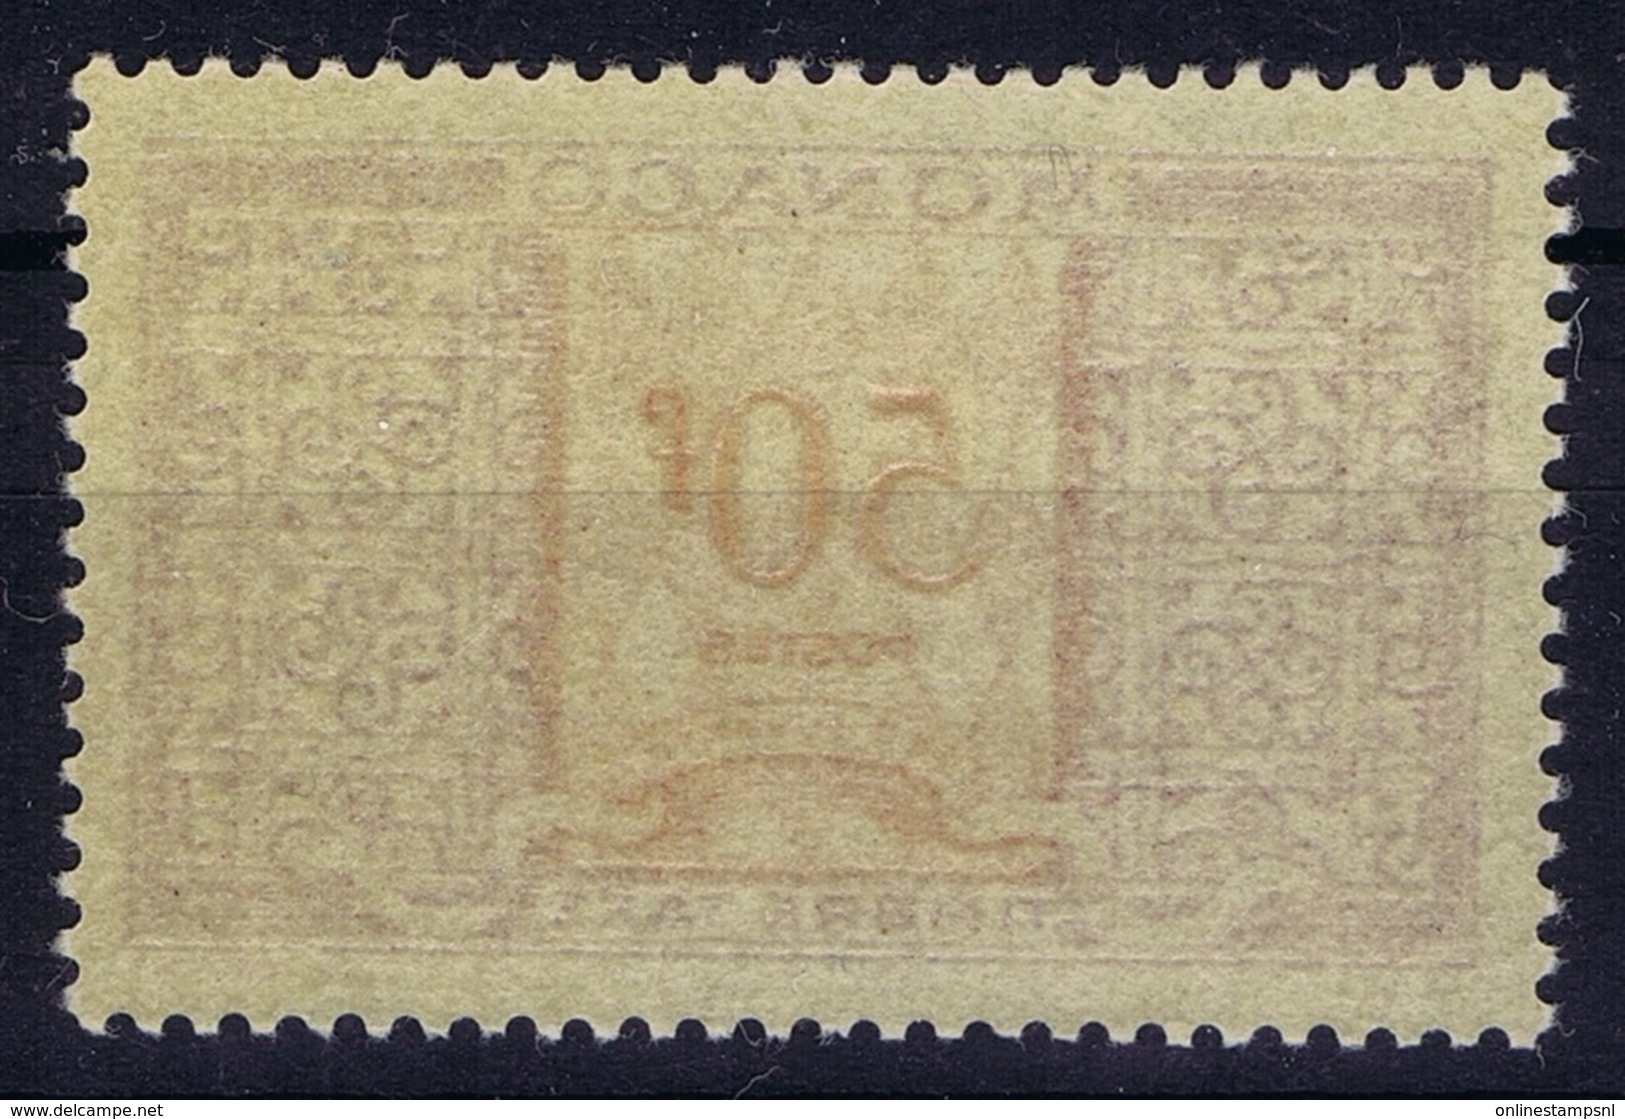 Monaco Mi 39 Timbre Tax   Postfrisch/neuf Sans Charniere /MNH/** 1950 - Taxe